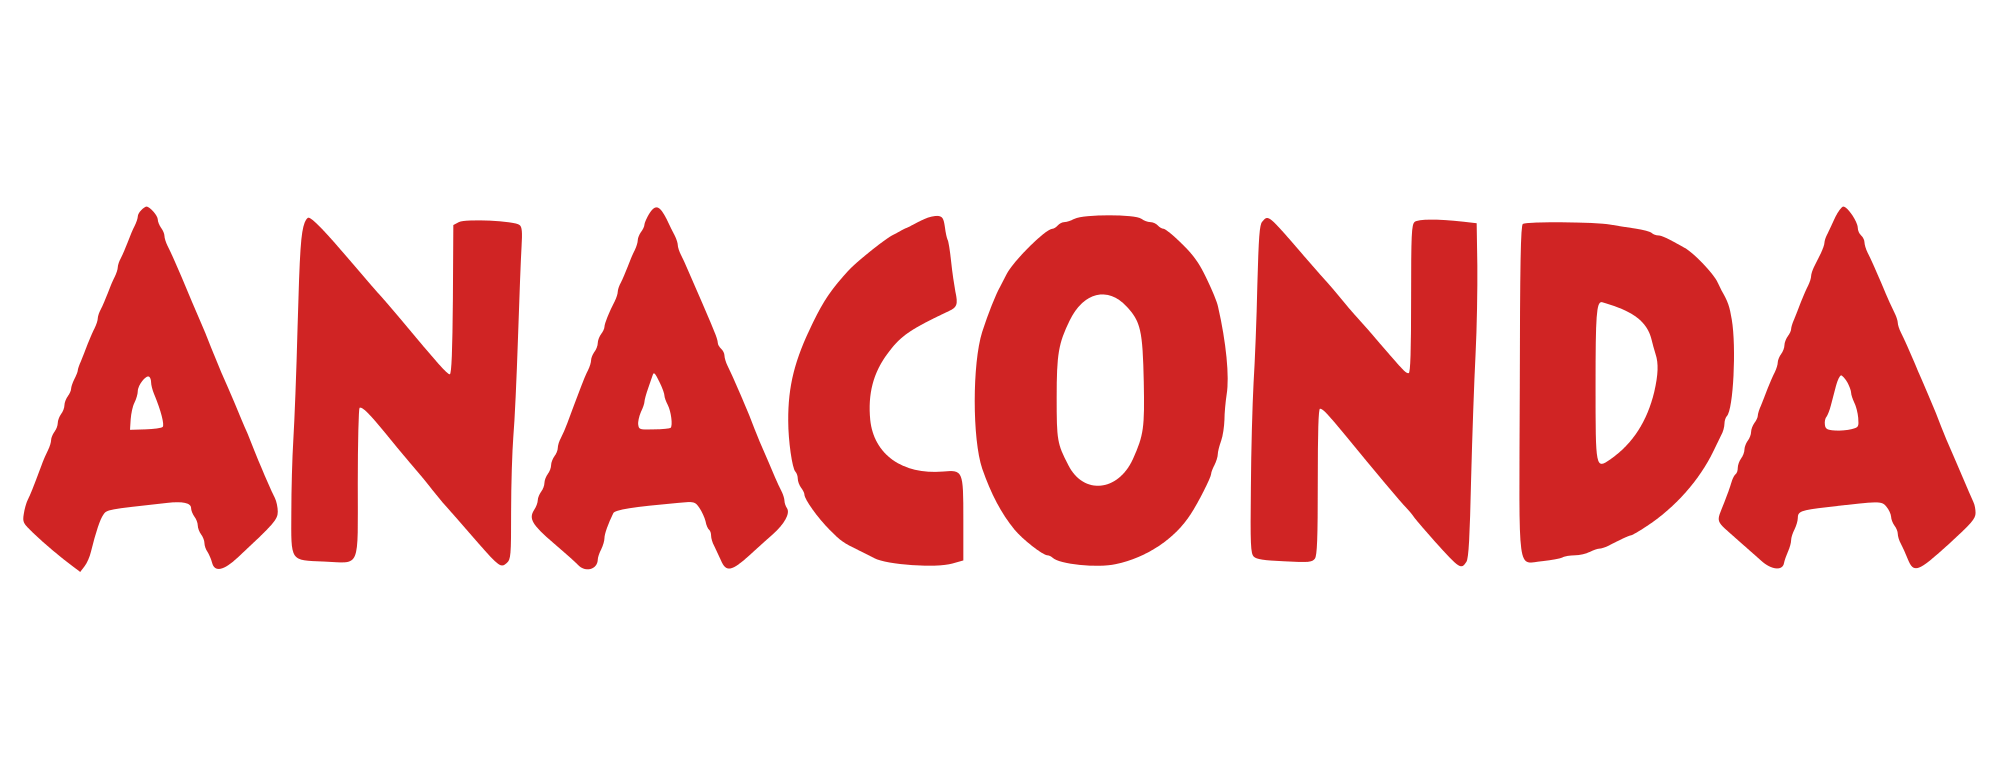 Anaconda Logo - File:Anaconda logo.svg - Wikimedia Commons